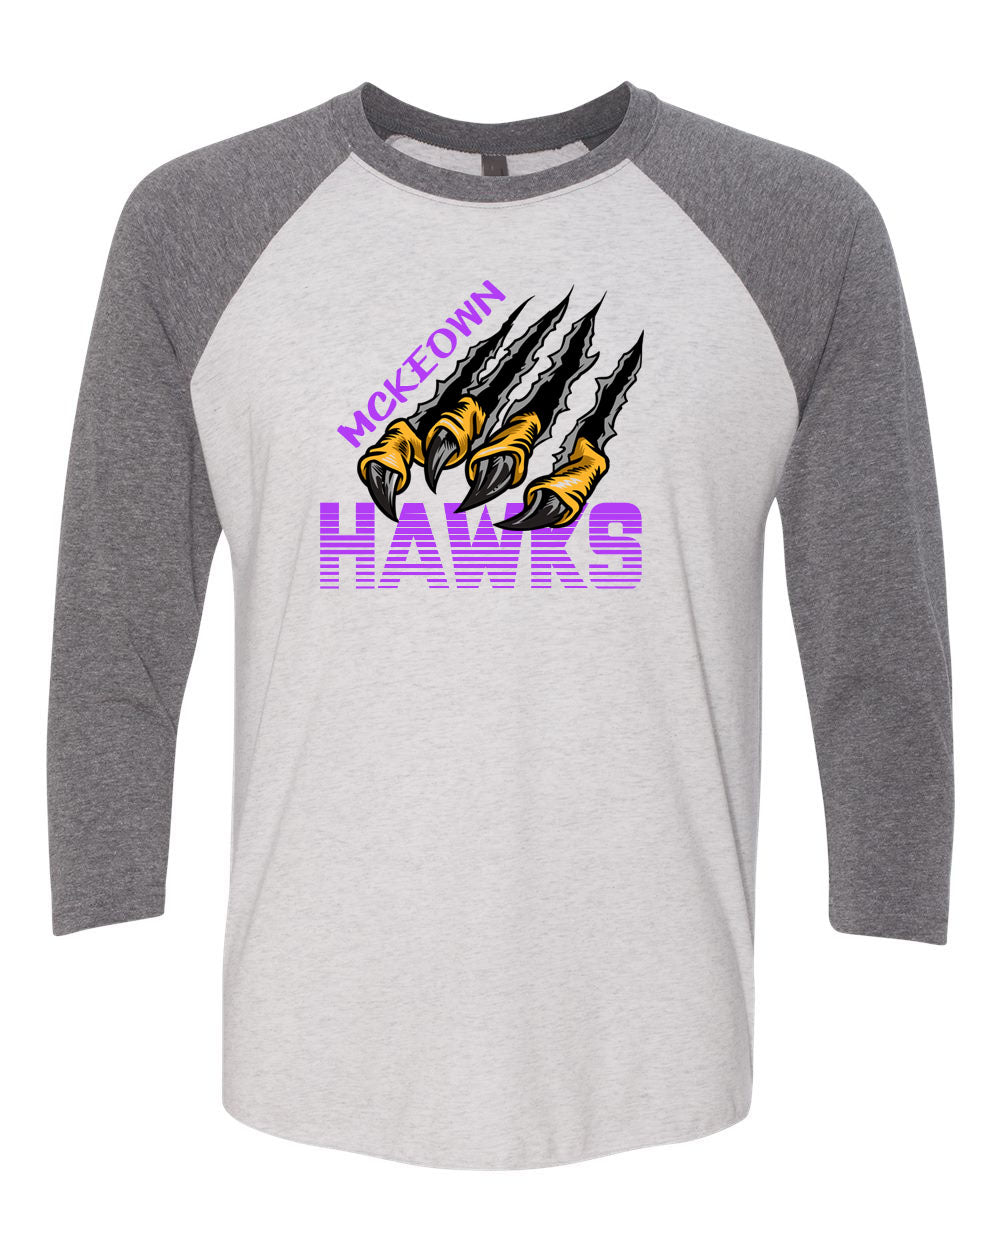 Hawk Claws Raglan shirt